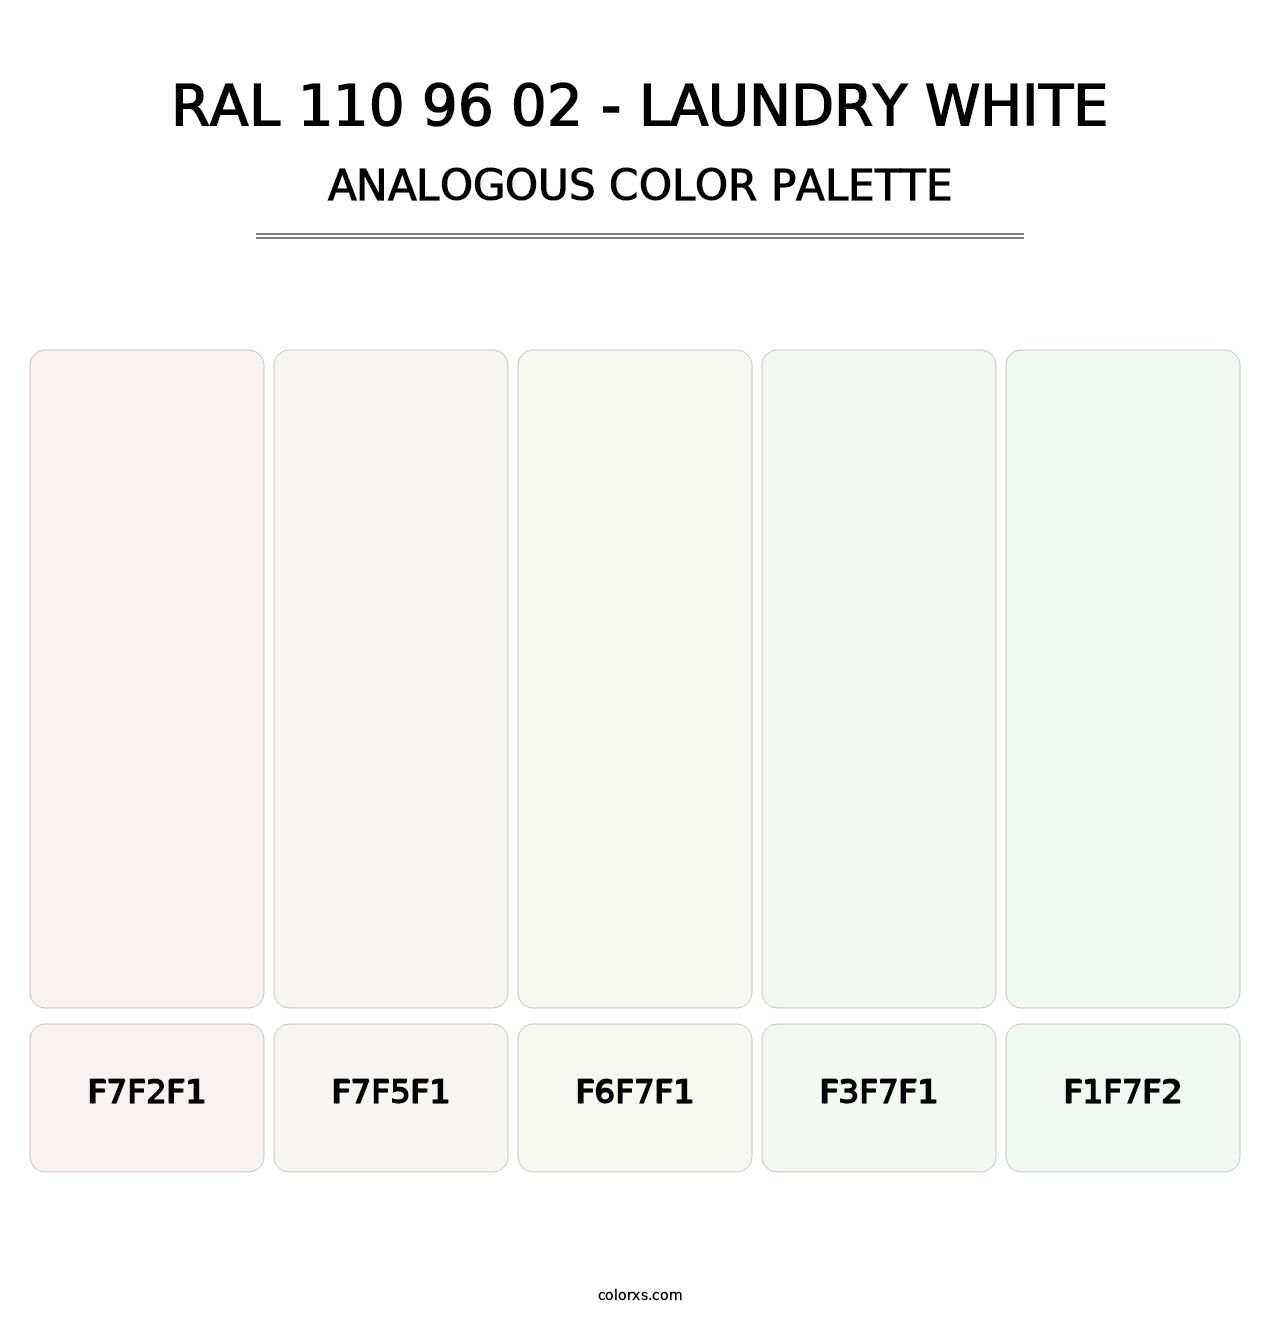 RAL 110 96 02 - Laundry White - Analogous Color Palette